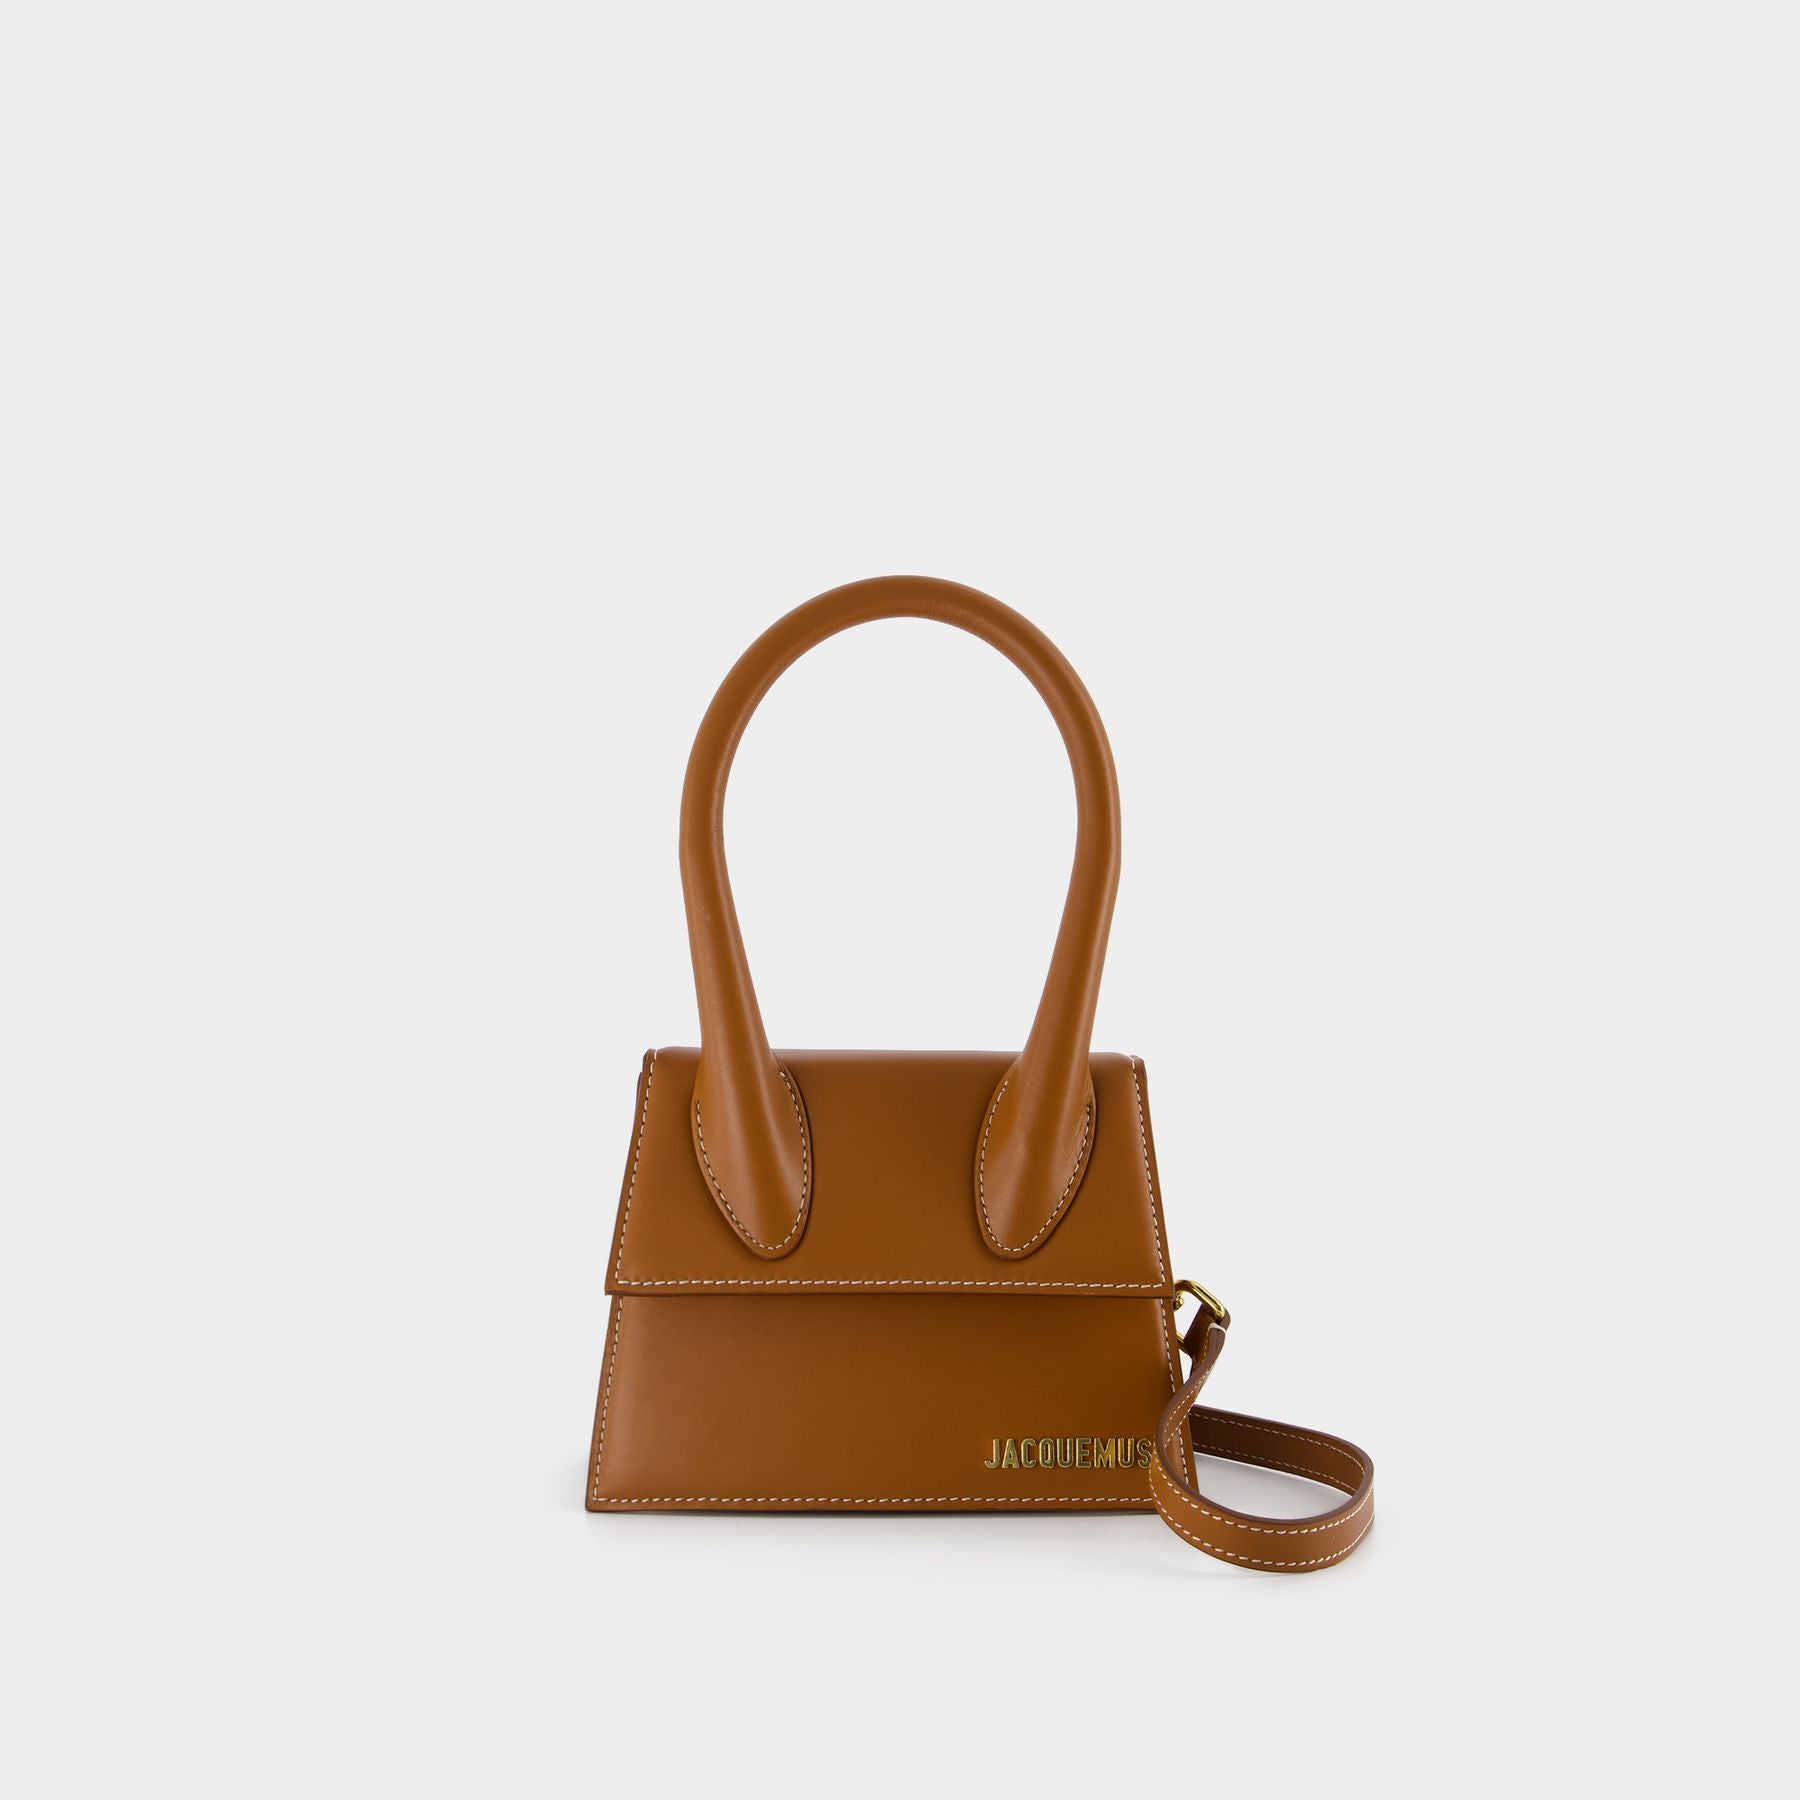 Luxury handbag - Mini Jacquemus bag in light brown leather